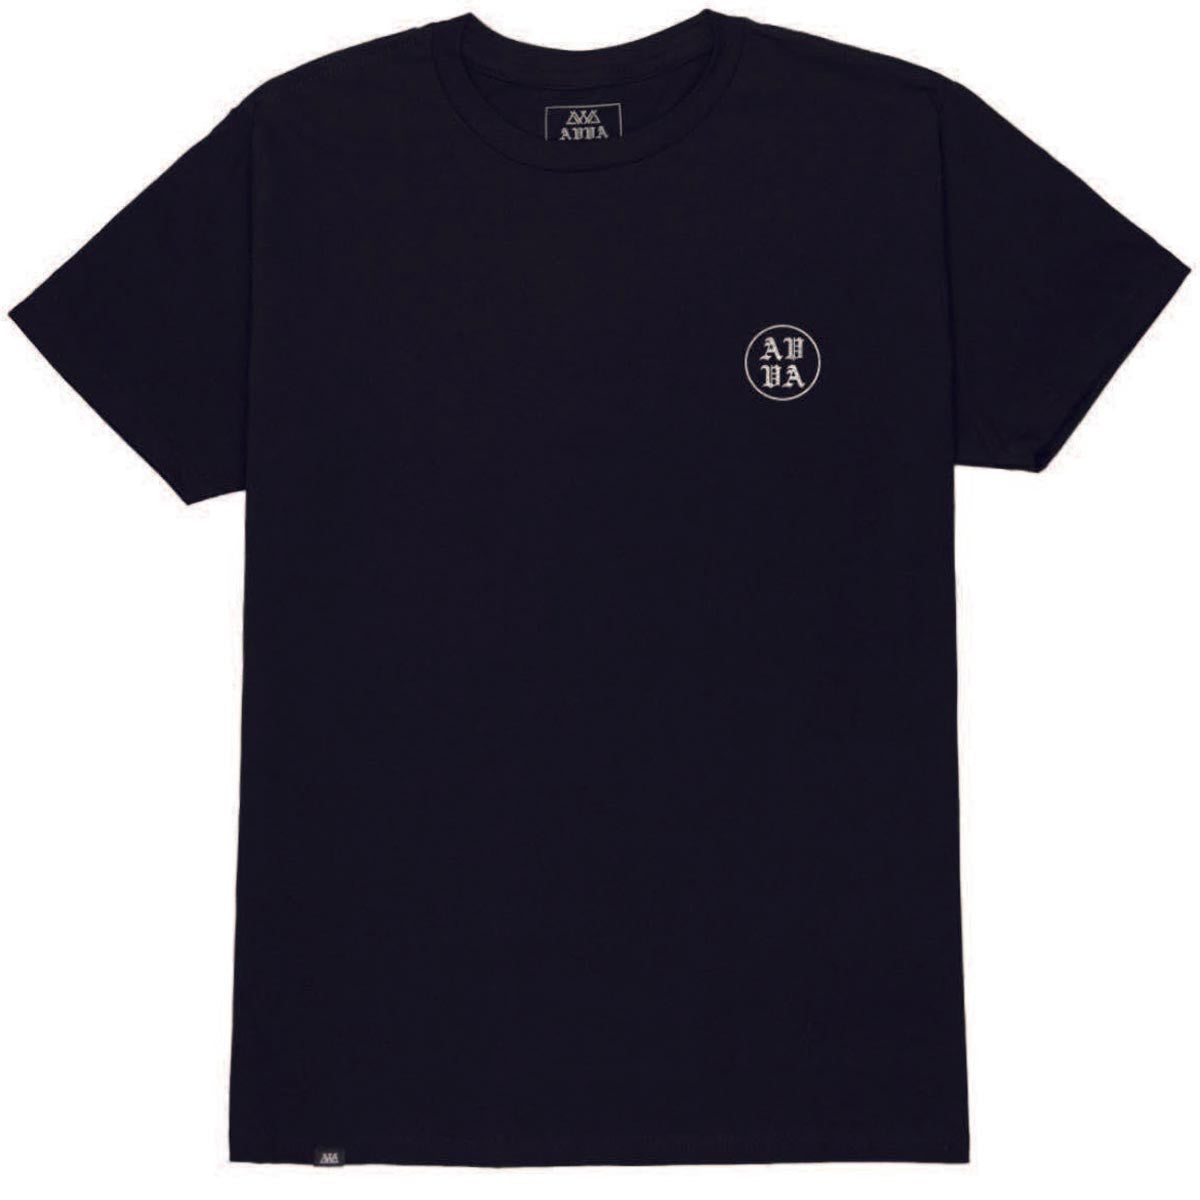 AVVA Gage T-Shirt - Black image 2